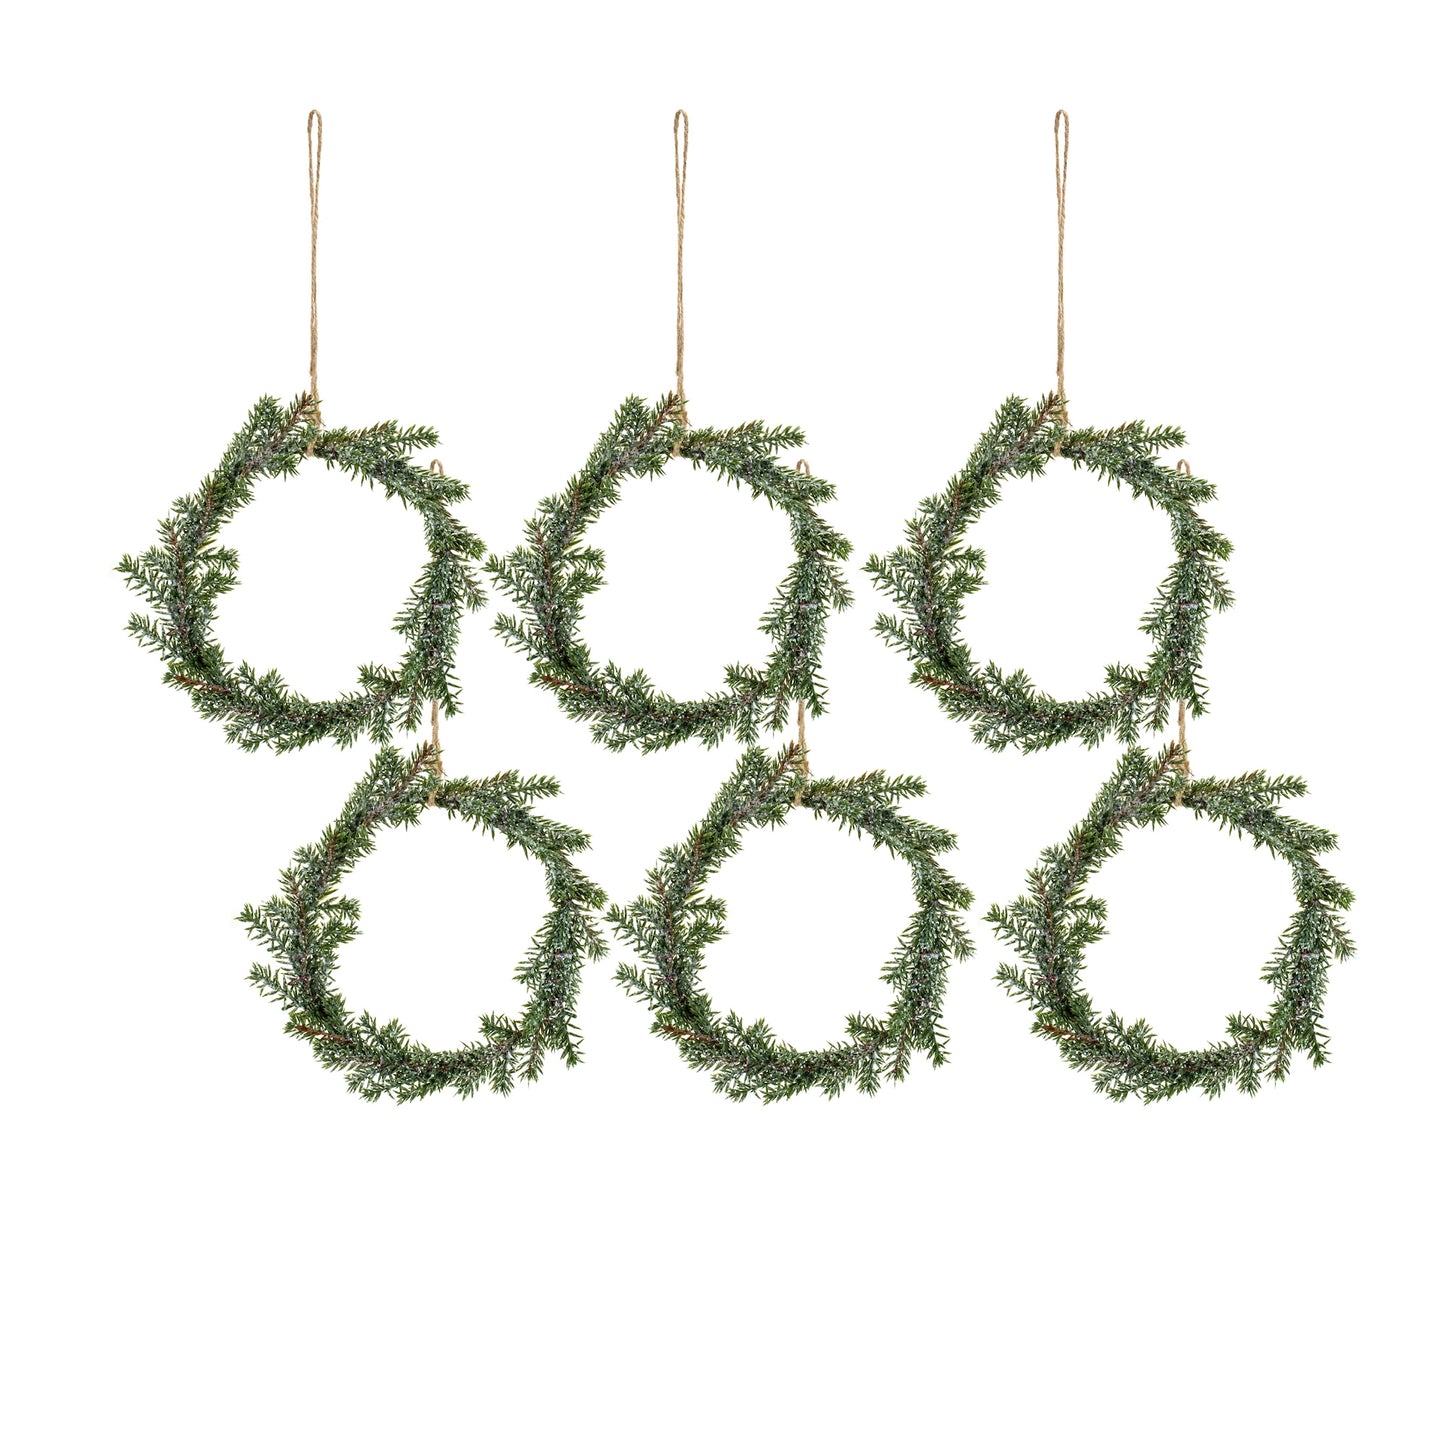 Winter Mini Pine Wreath with Jute Hanger (Set of 6)